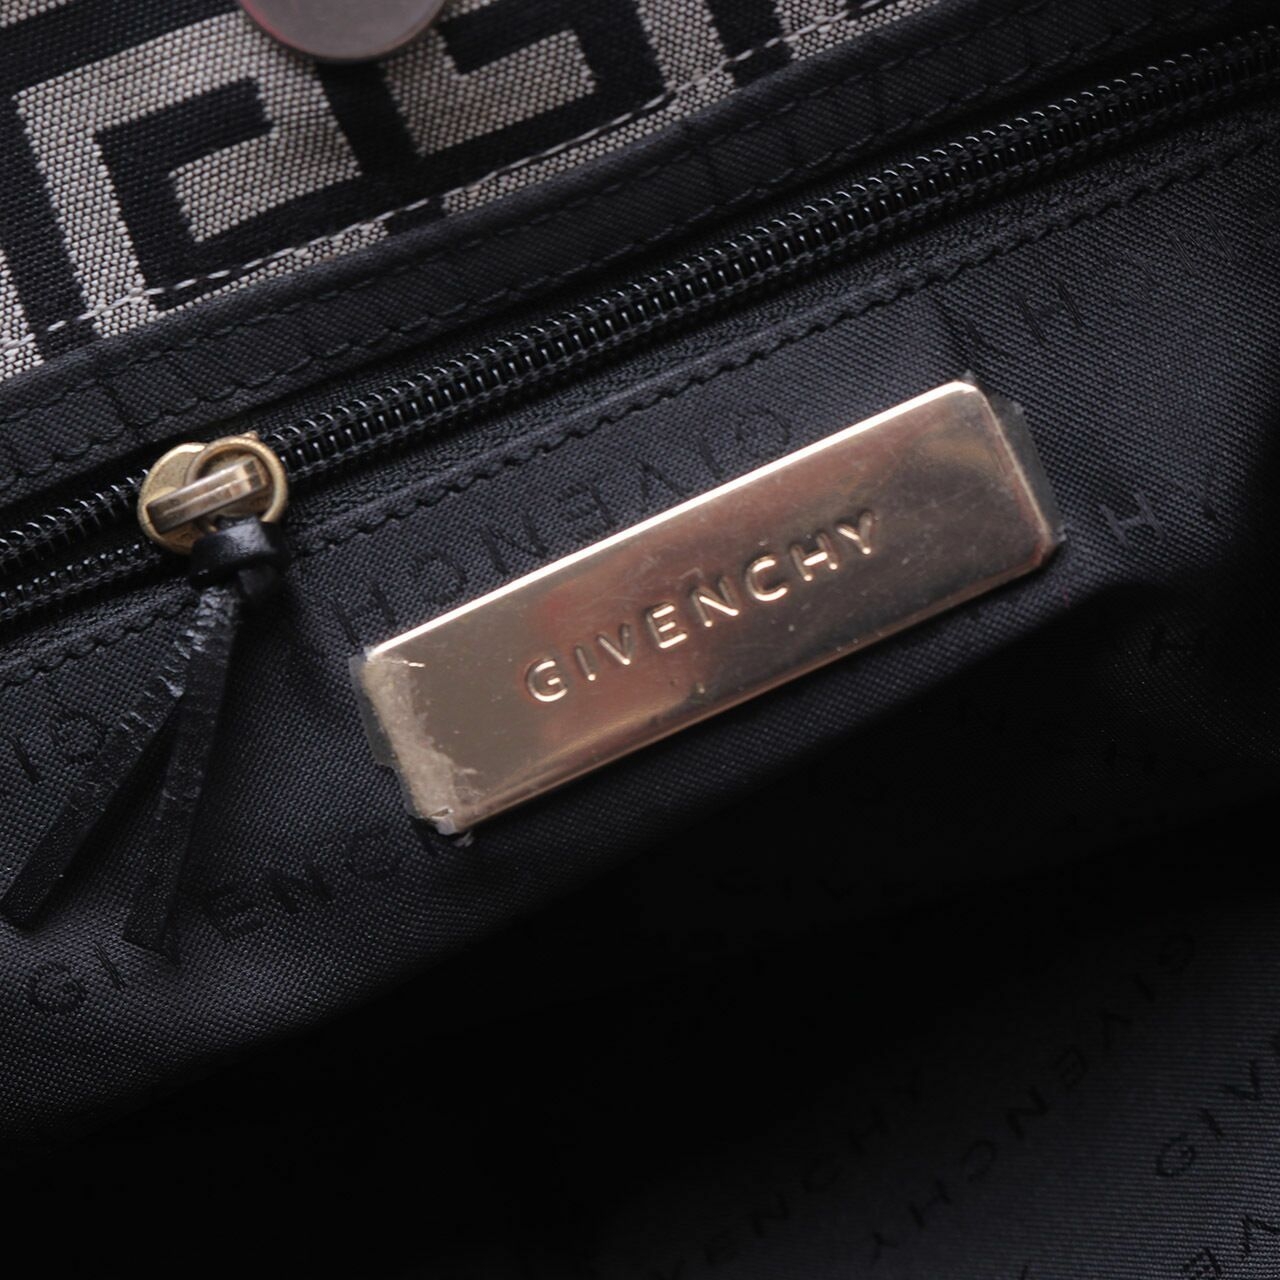 Givenchy Monogram Borsa a Spalla Black Tote bag